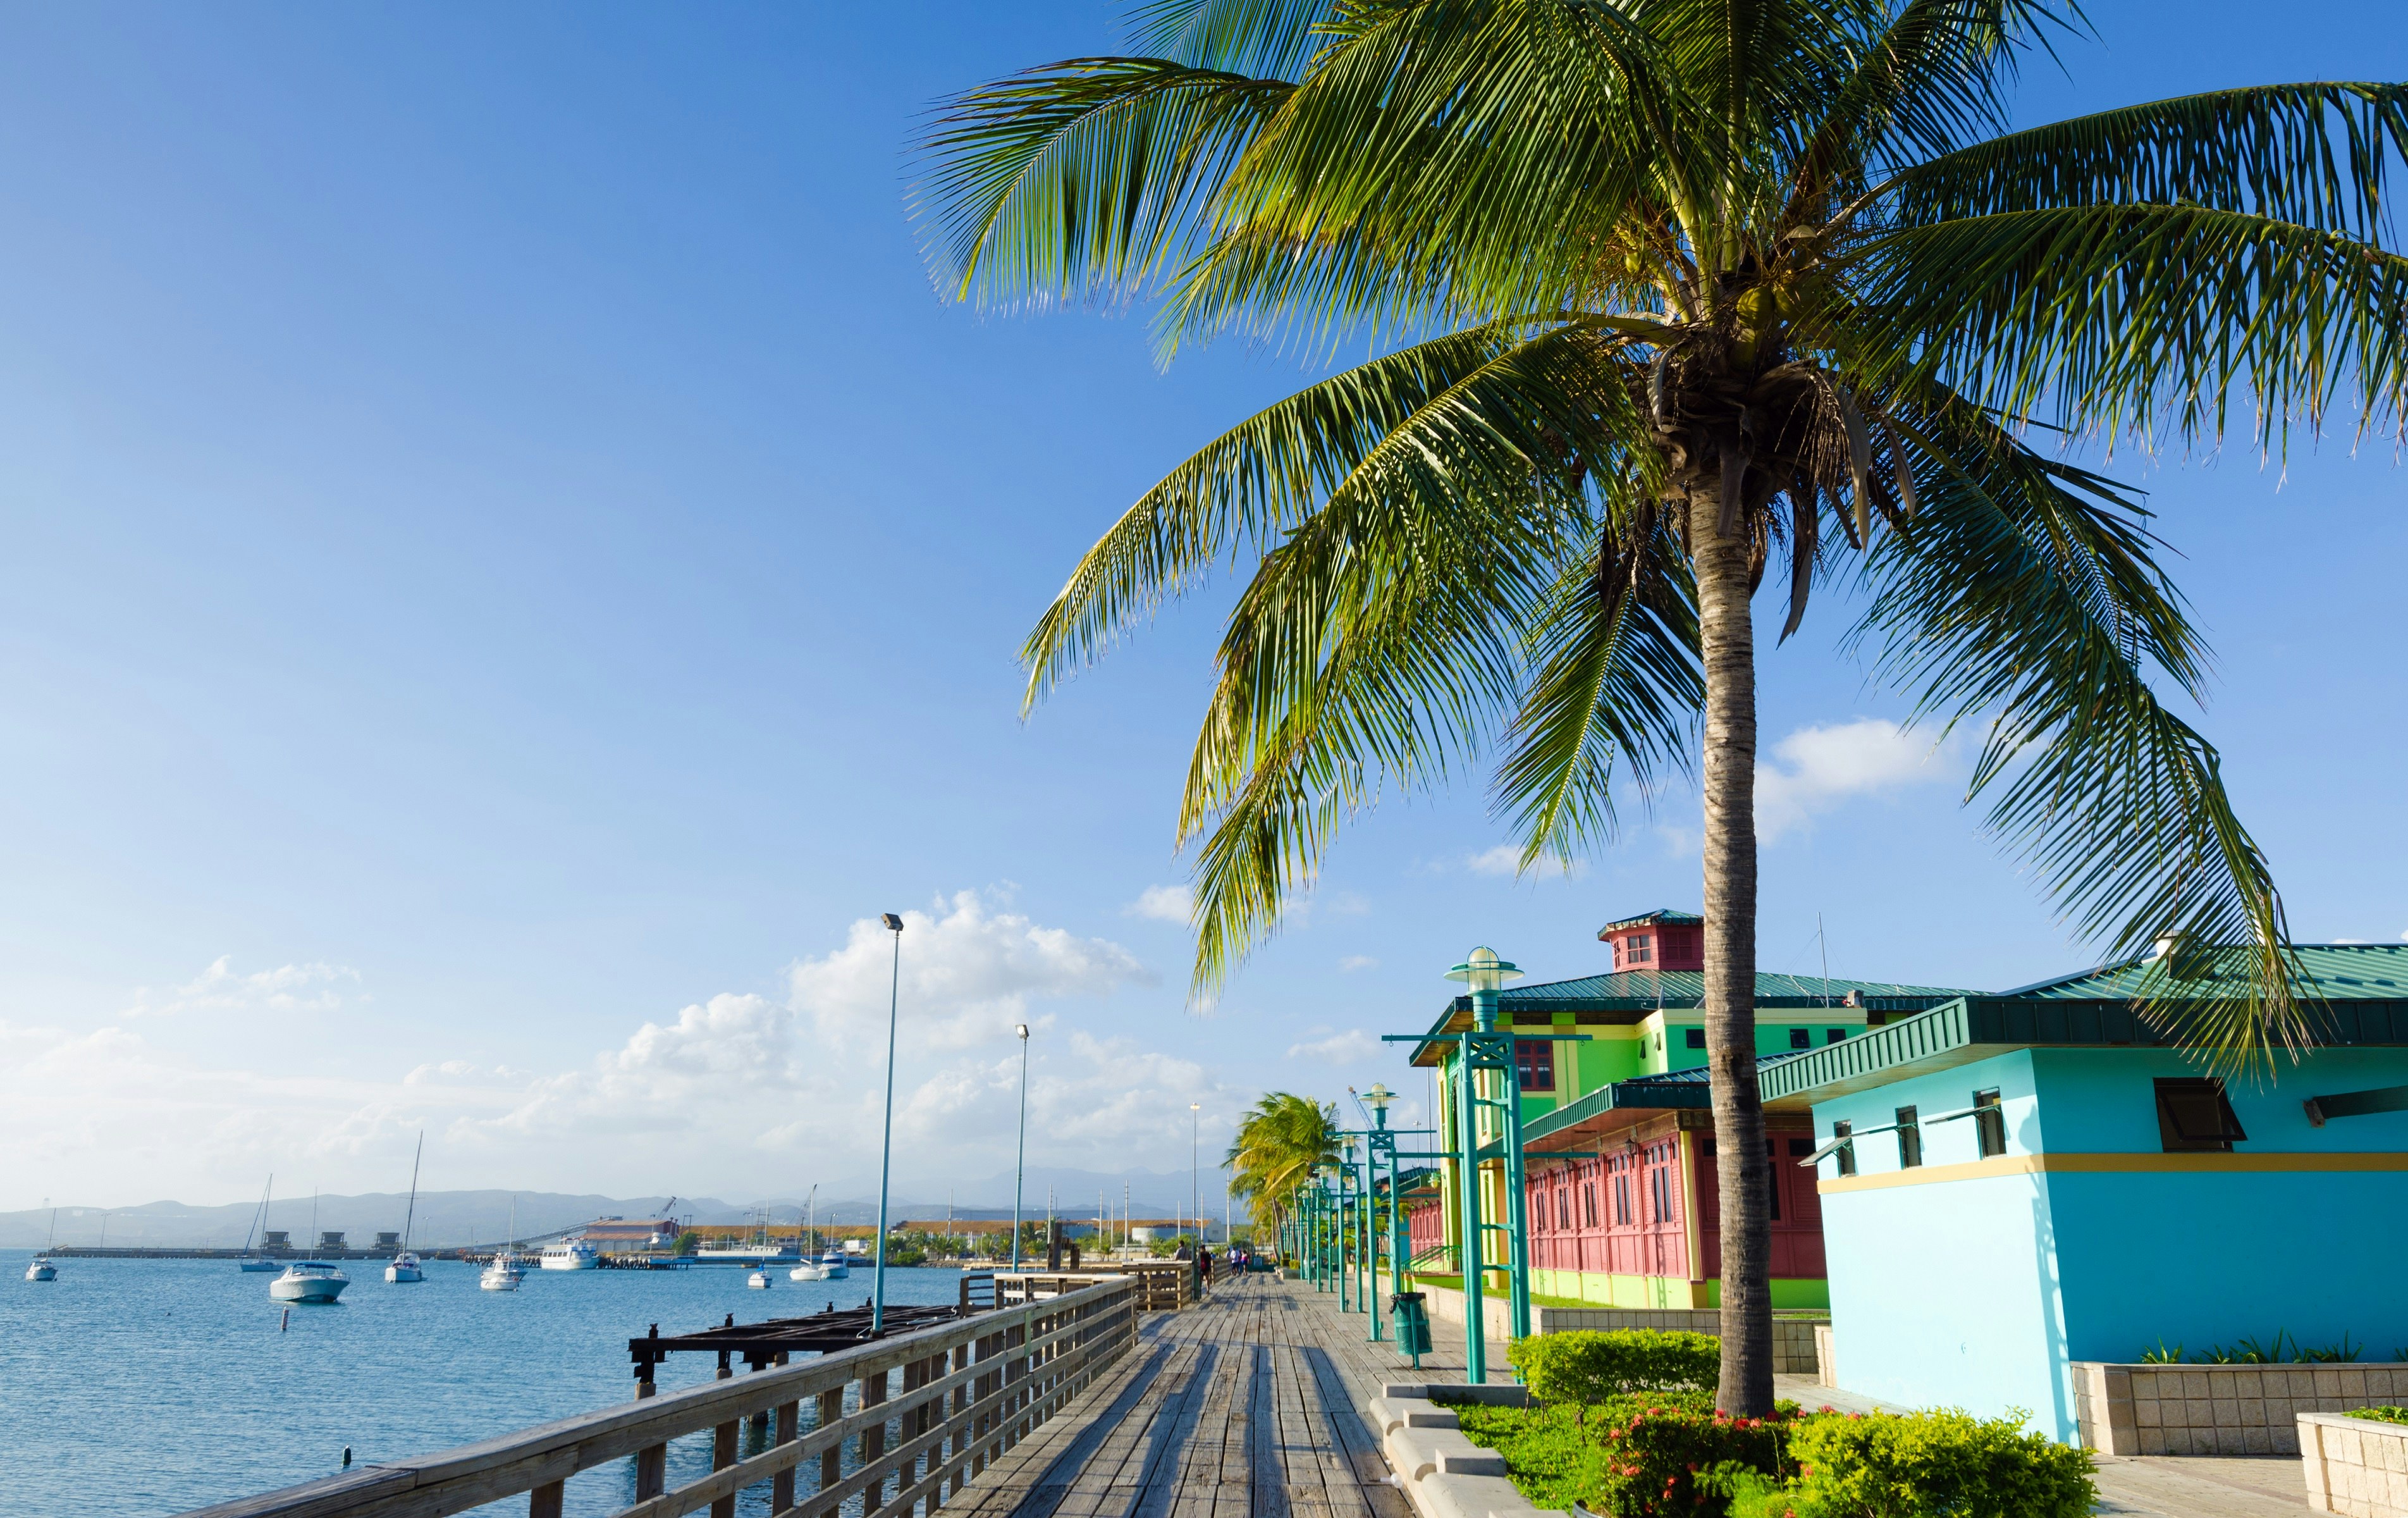 The La Guancha wooden boardwalk running alongside the sea in Ponce, Puerto Rico.